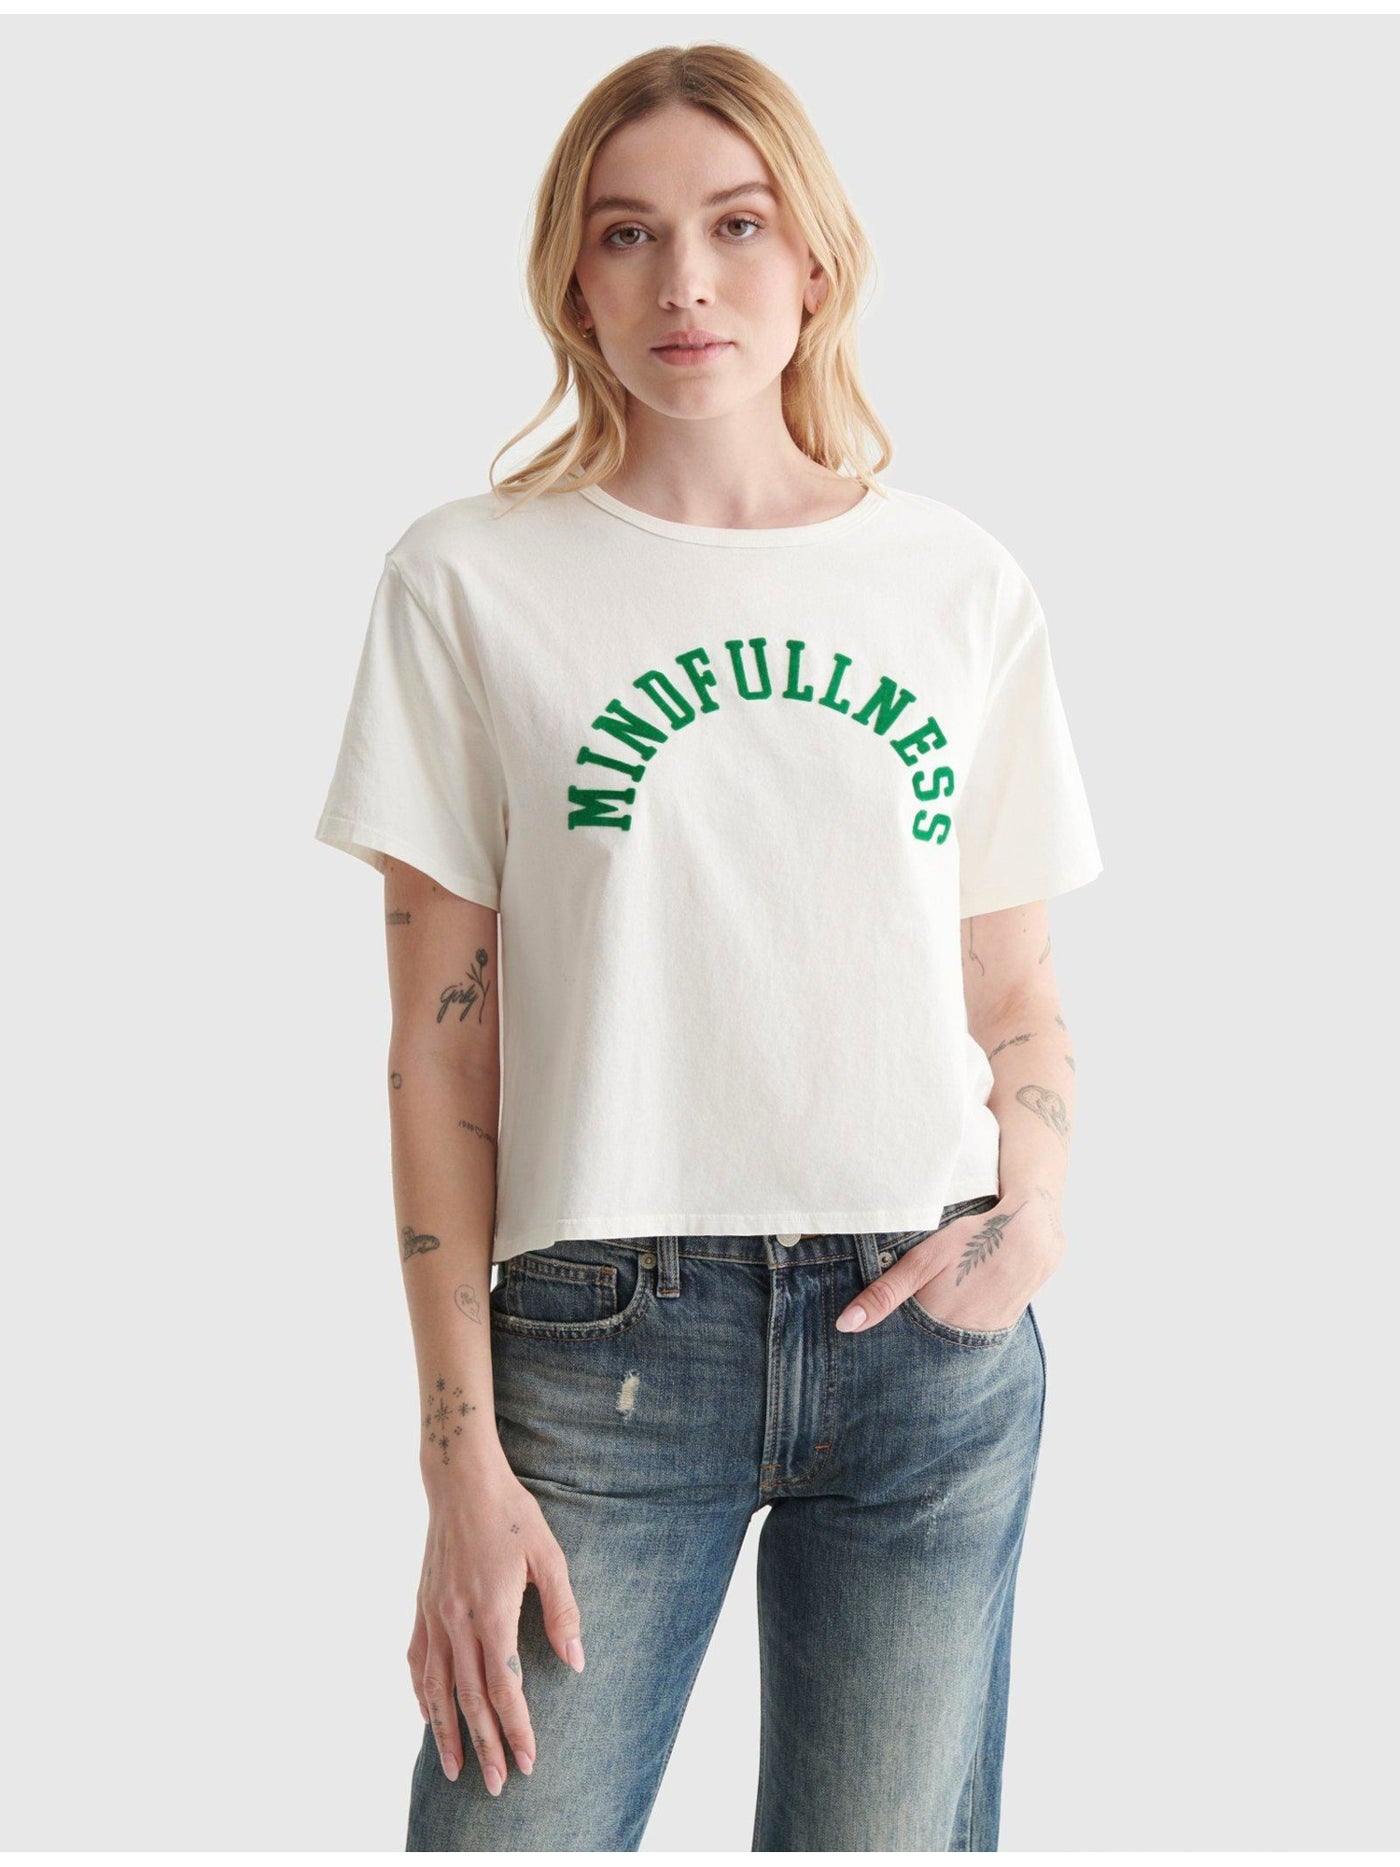 LUCKY BRAND Womens Ivory Graphic Short Sleeve Crew Neck T-Shirt XL